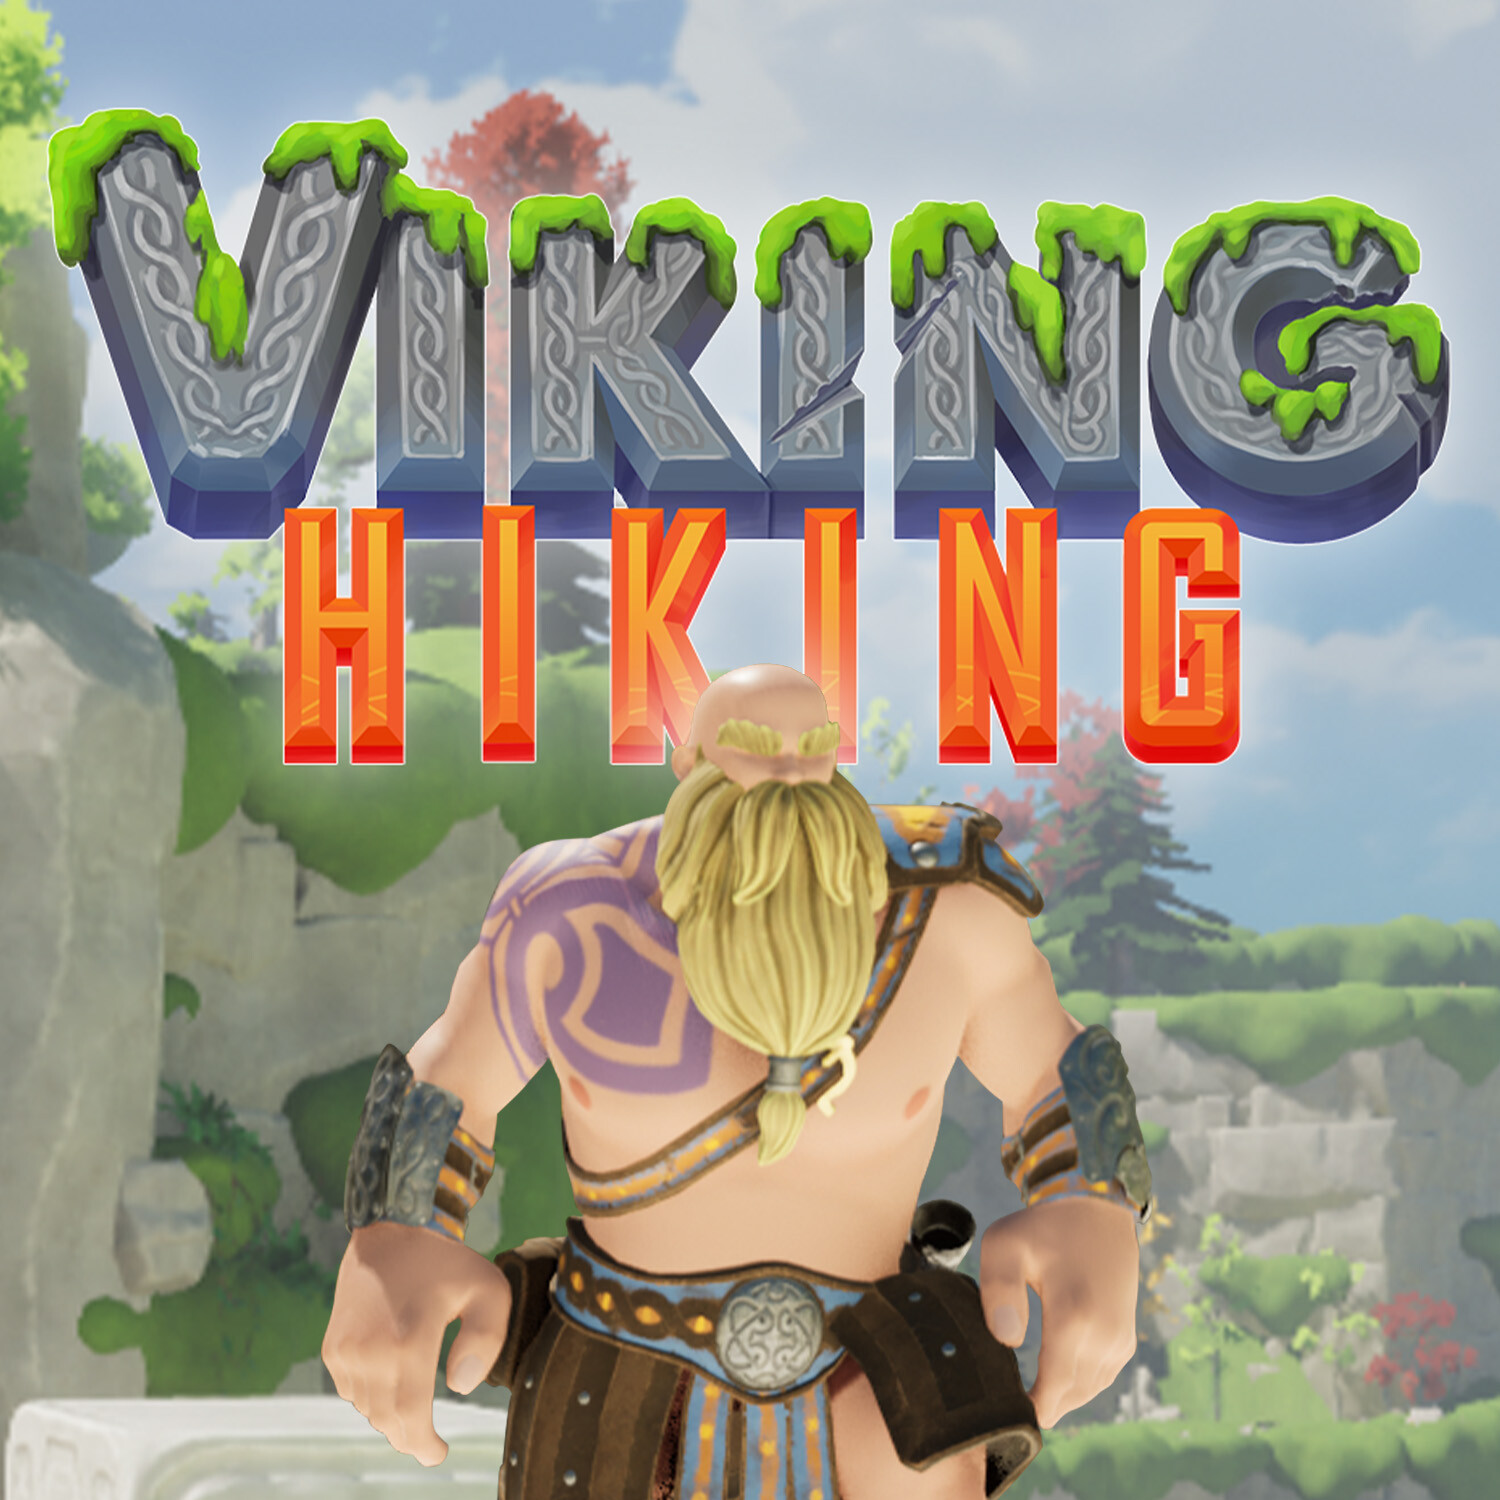 Viking Hiking no Steam